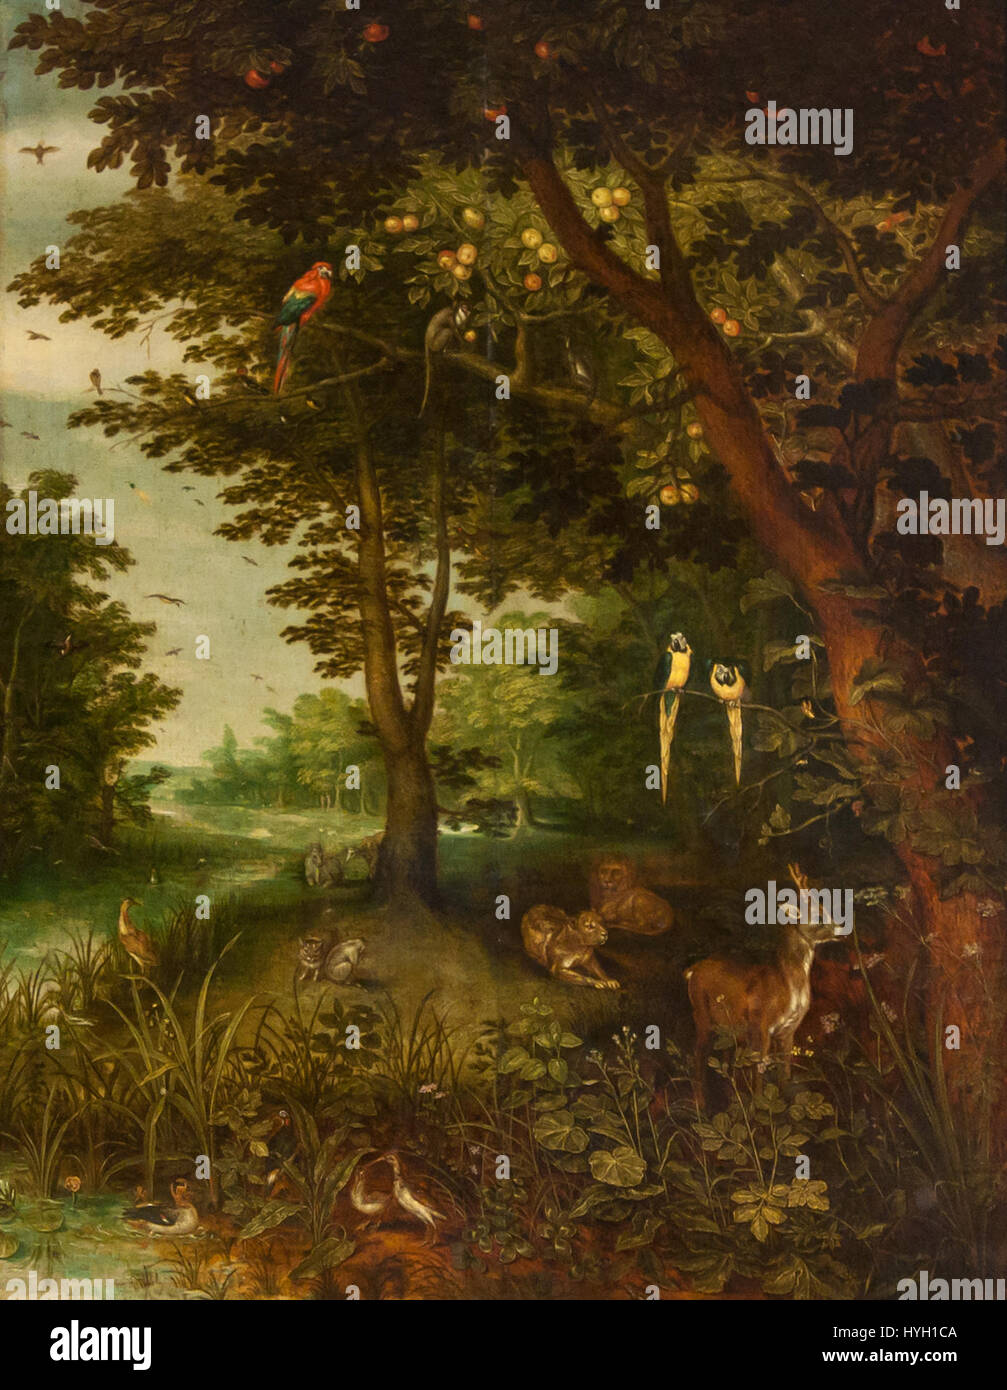 Jan Brueghel de Oude (1568 1625) Het Paradijs traf Dieren (1620) Sevilla Bellas Artes 22 03 2011 11 08 00 Stockfoto